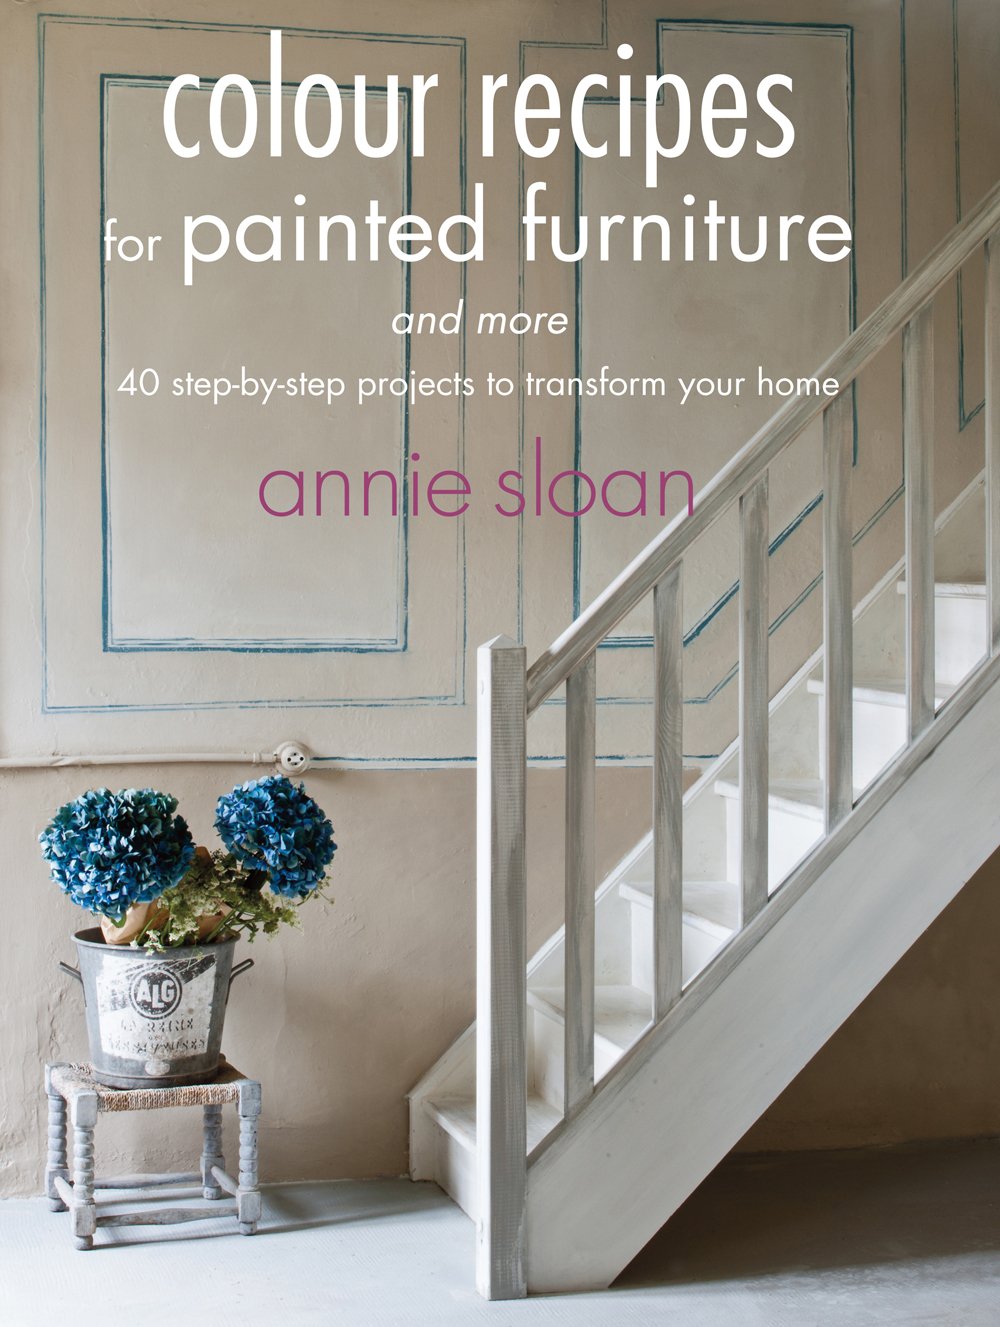 Annie Sloan Chalk Paint® Soft Wax, Edwin Loy Home